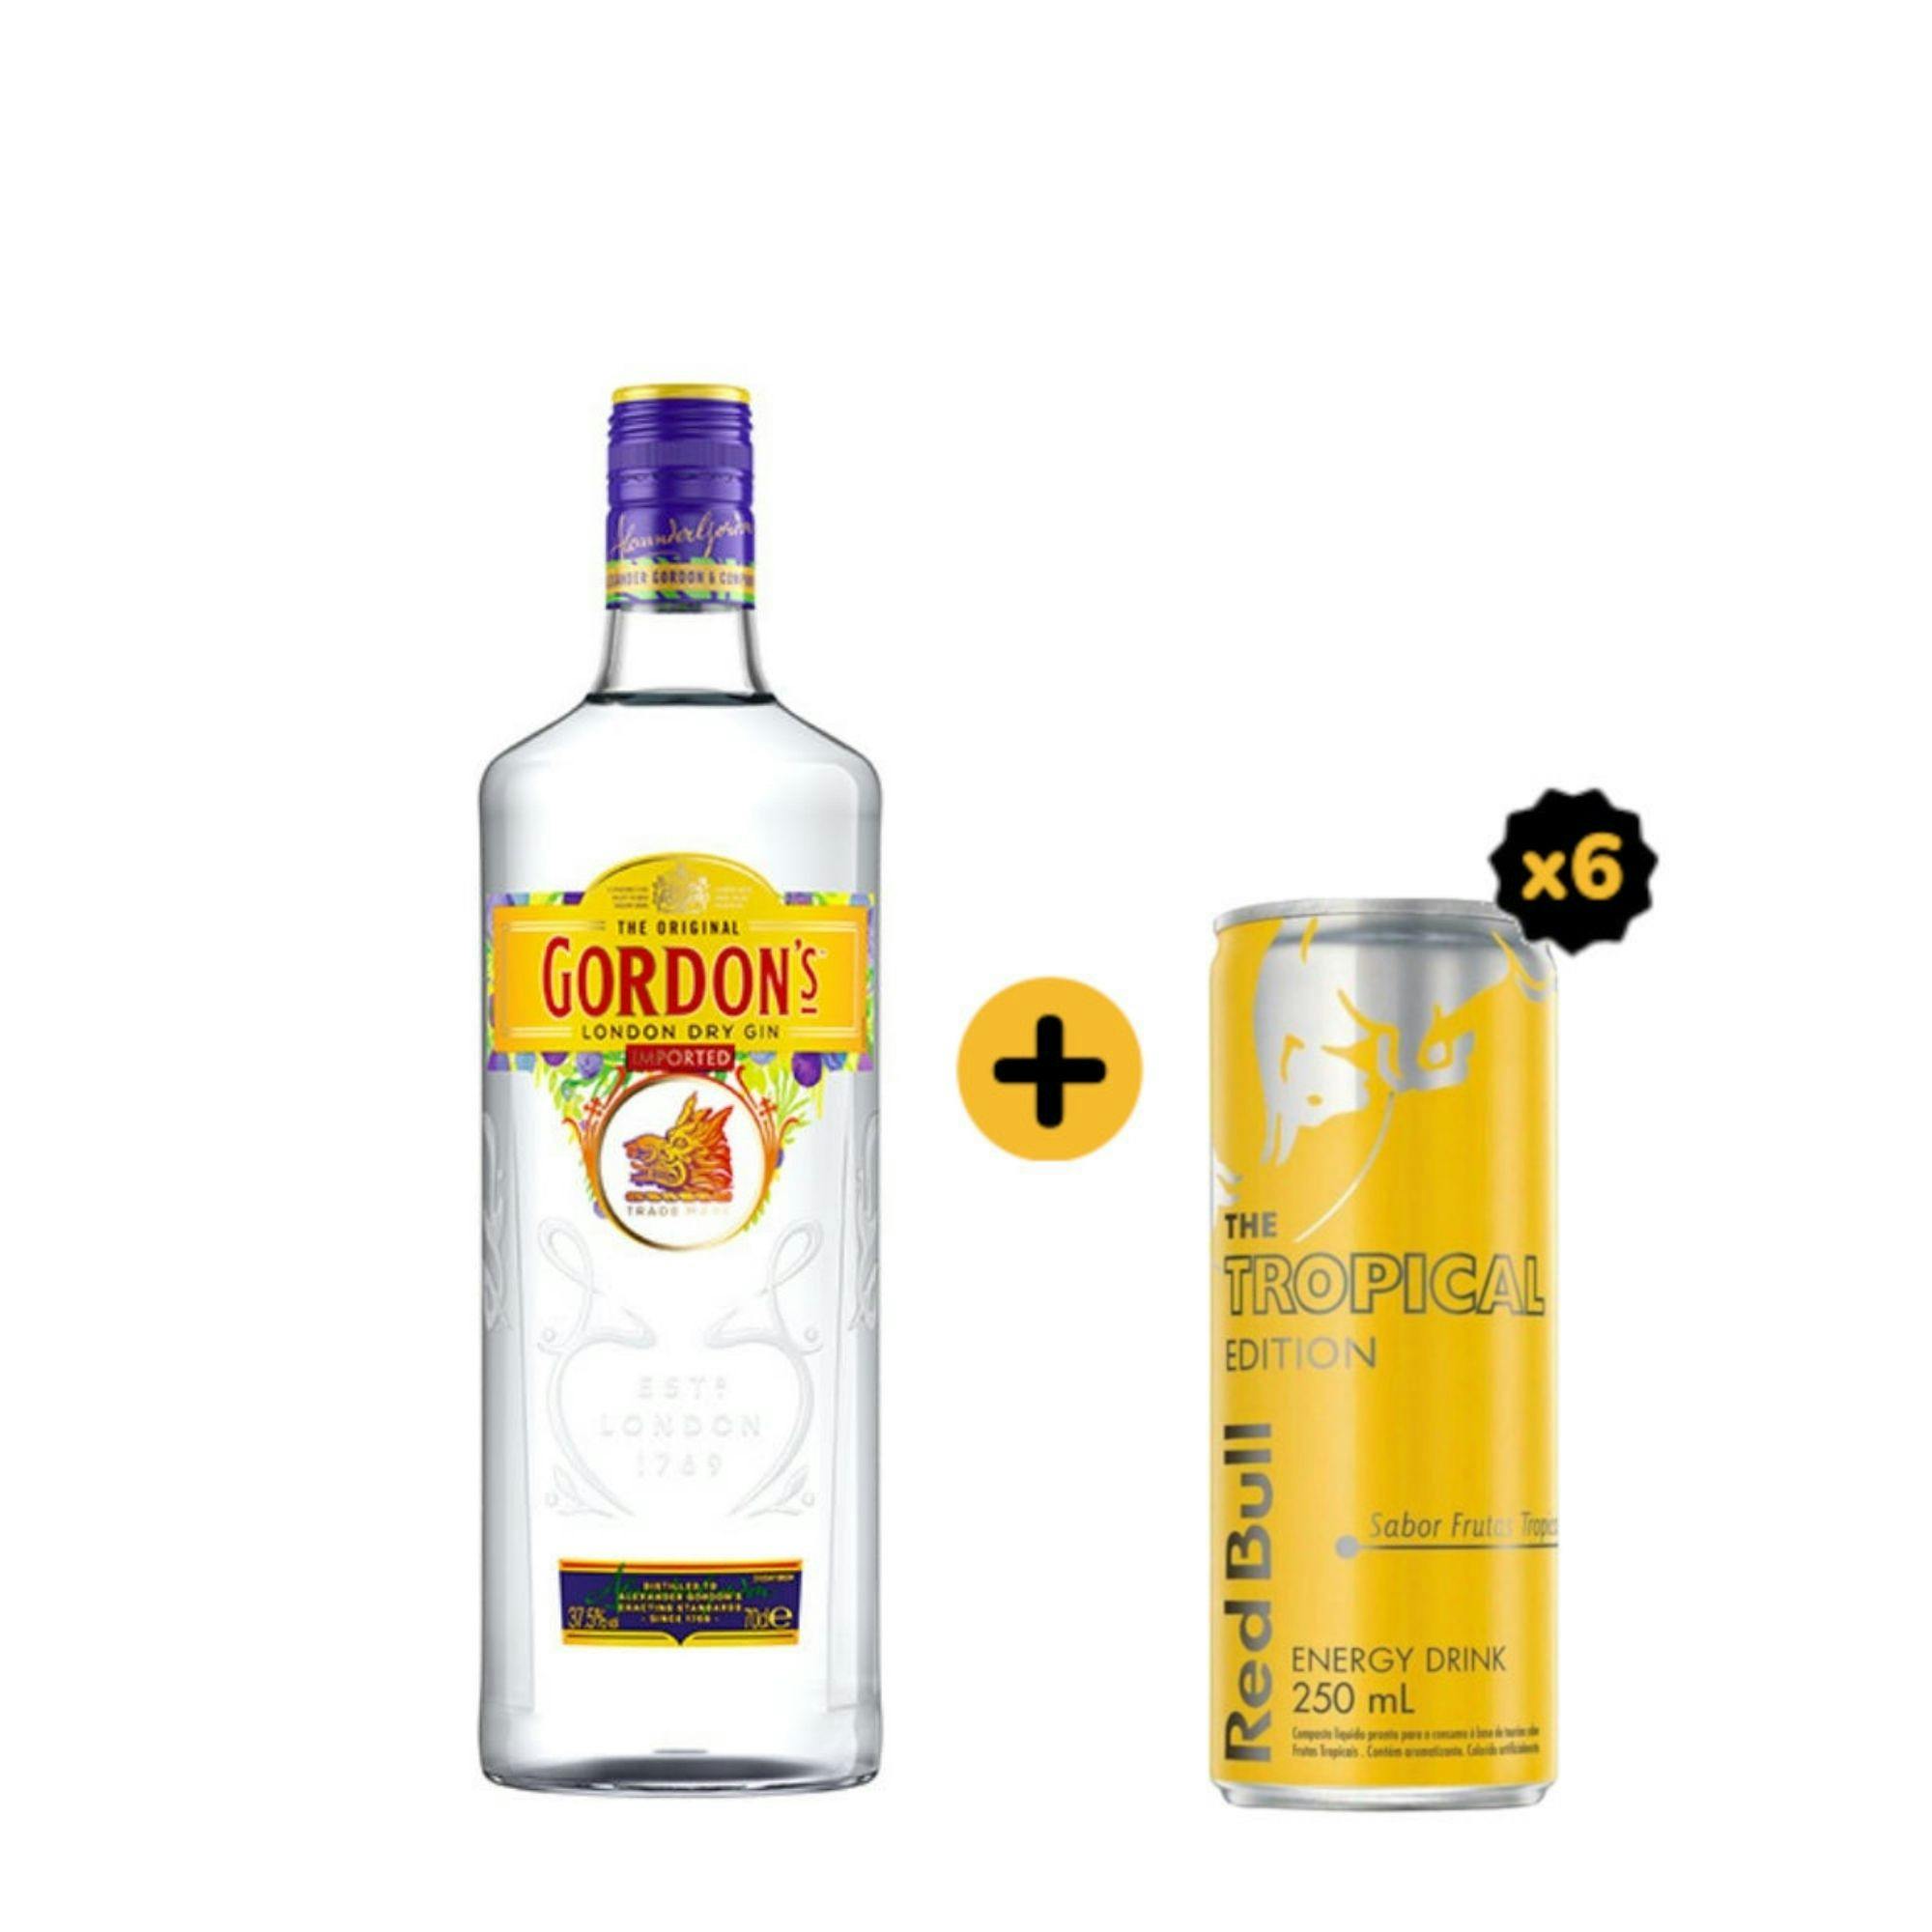 Combo Gordons + Red Bull (1 Gin Gordons London Dry 750ml + 6 Red Bull Tropical Edition 250ml)